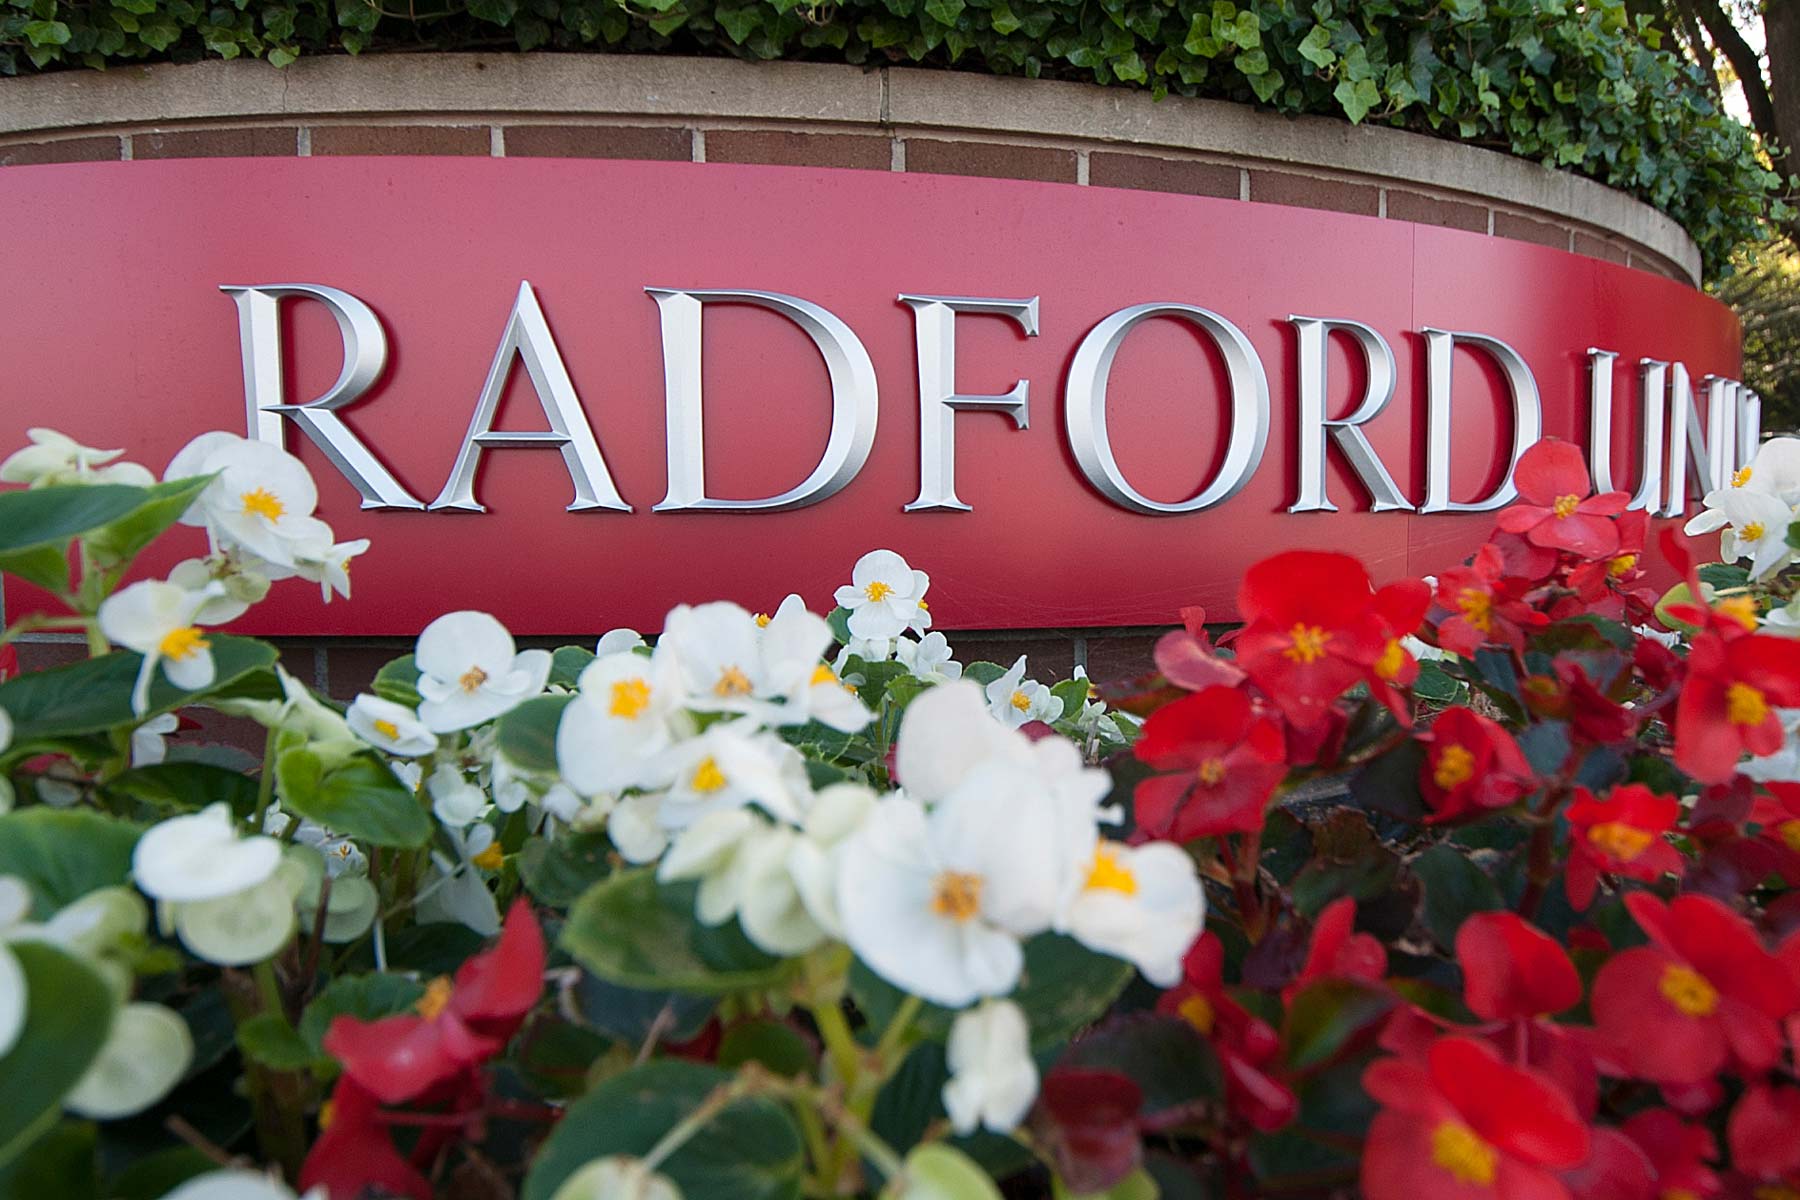 Radford University on a red entrance sign